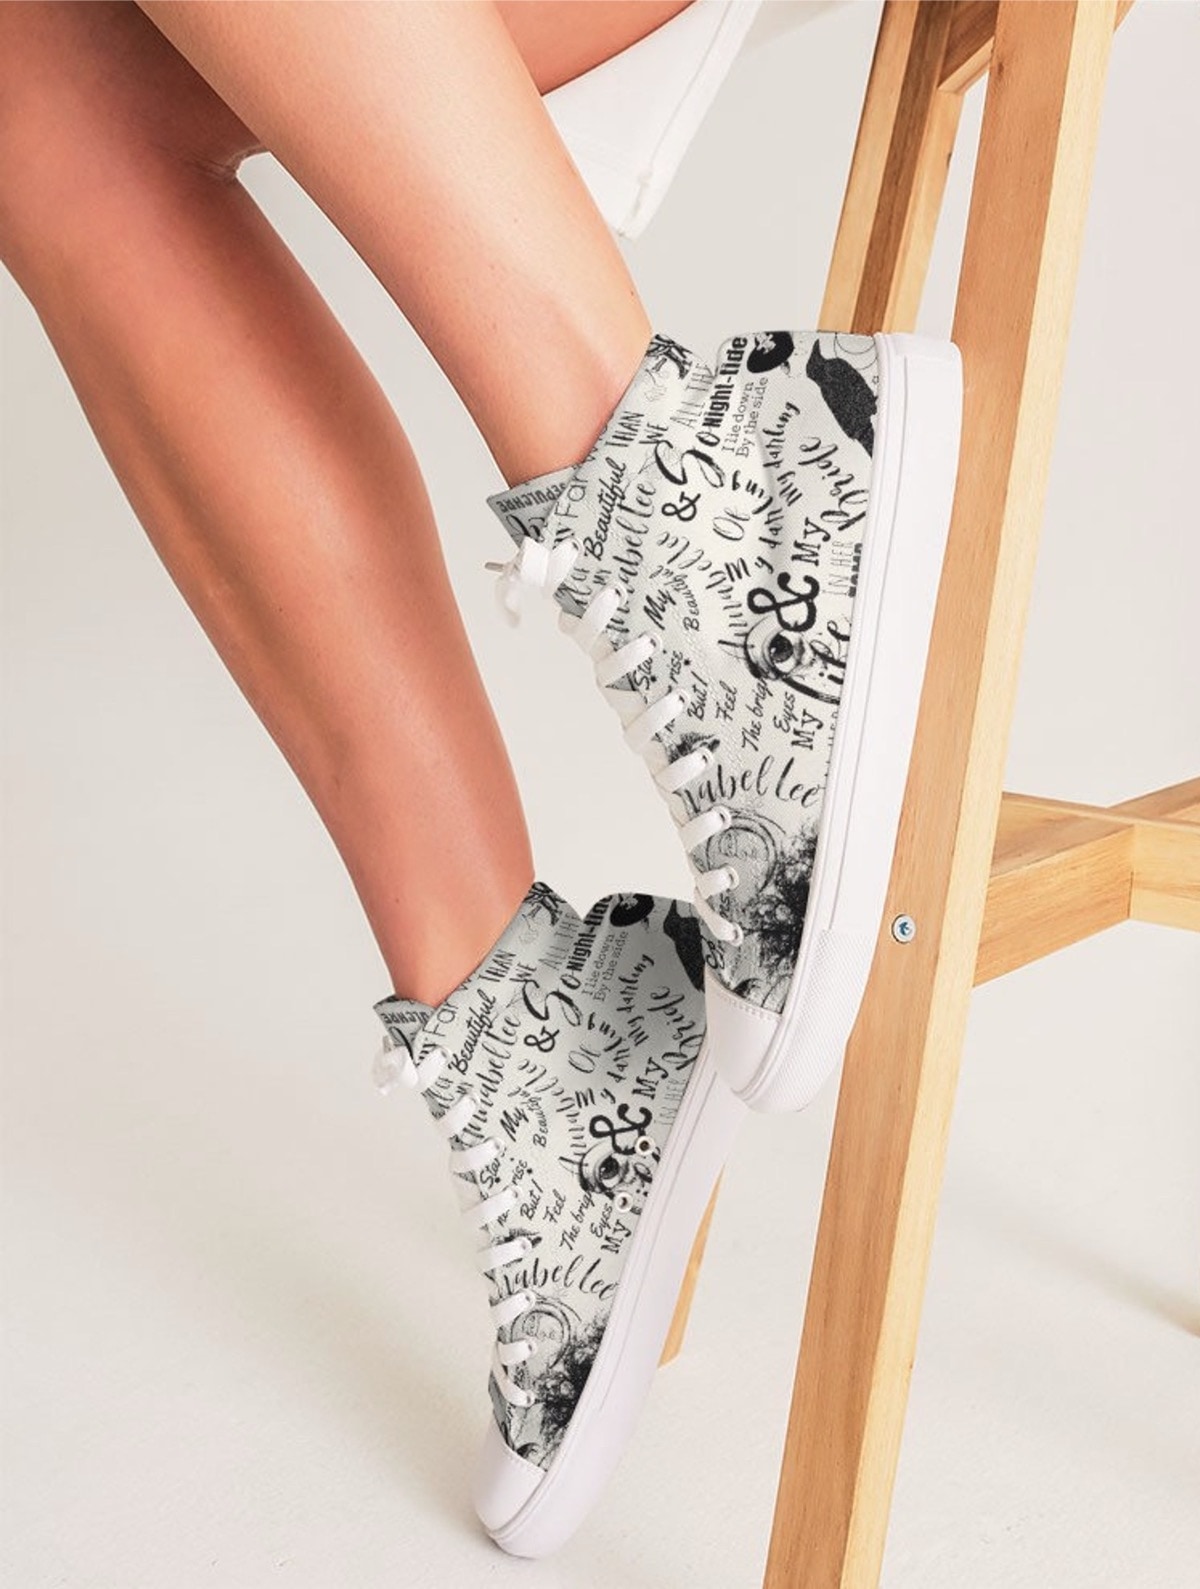 Annabel Lee sneakers - bookish apparel